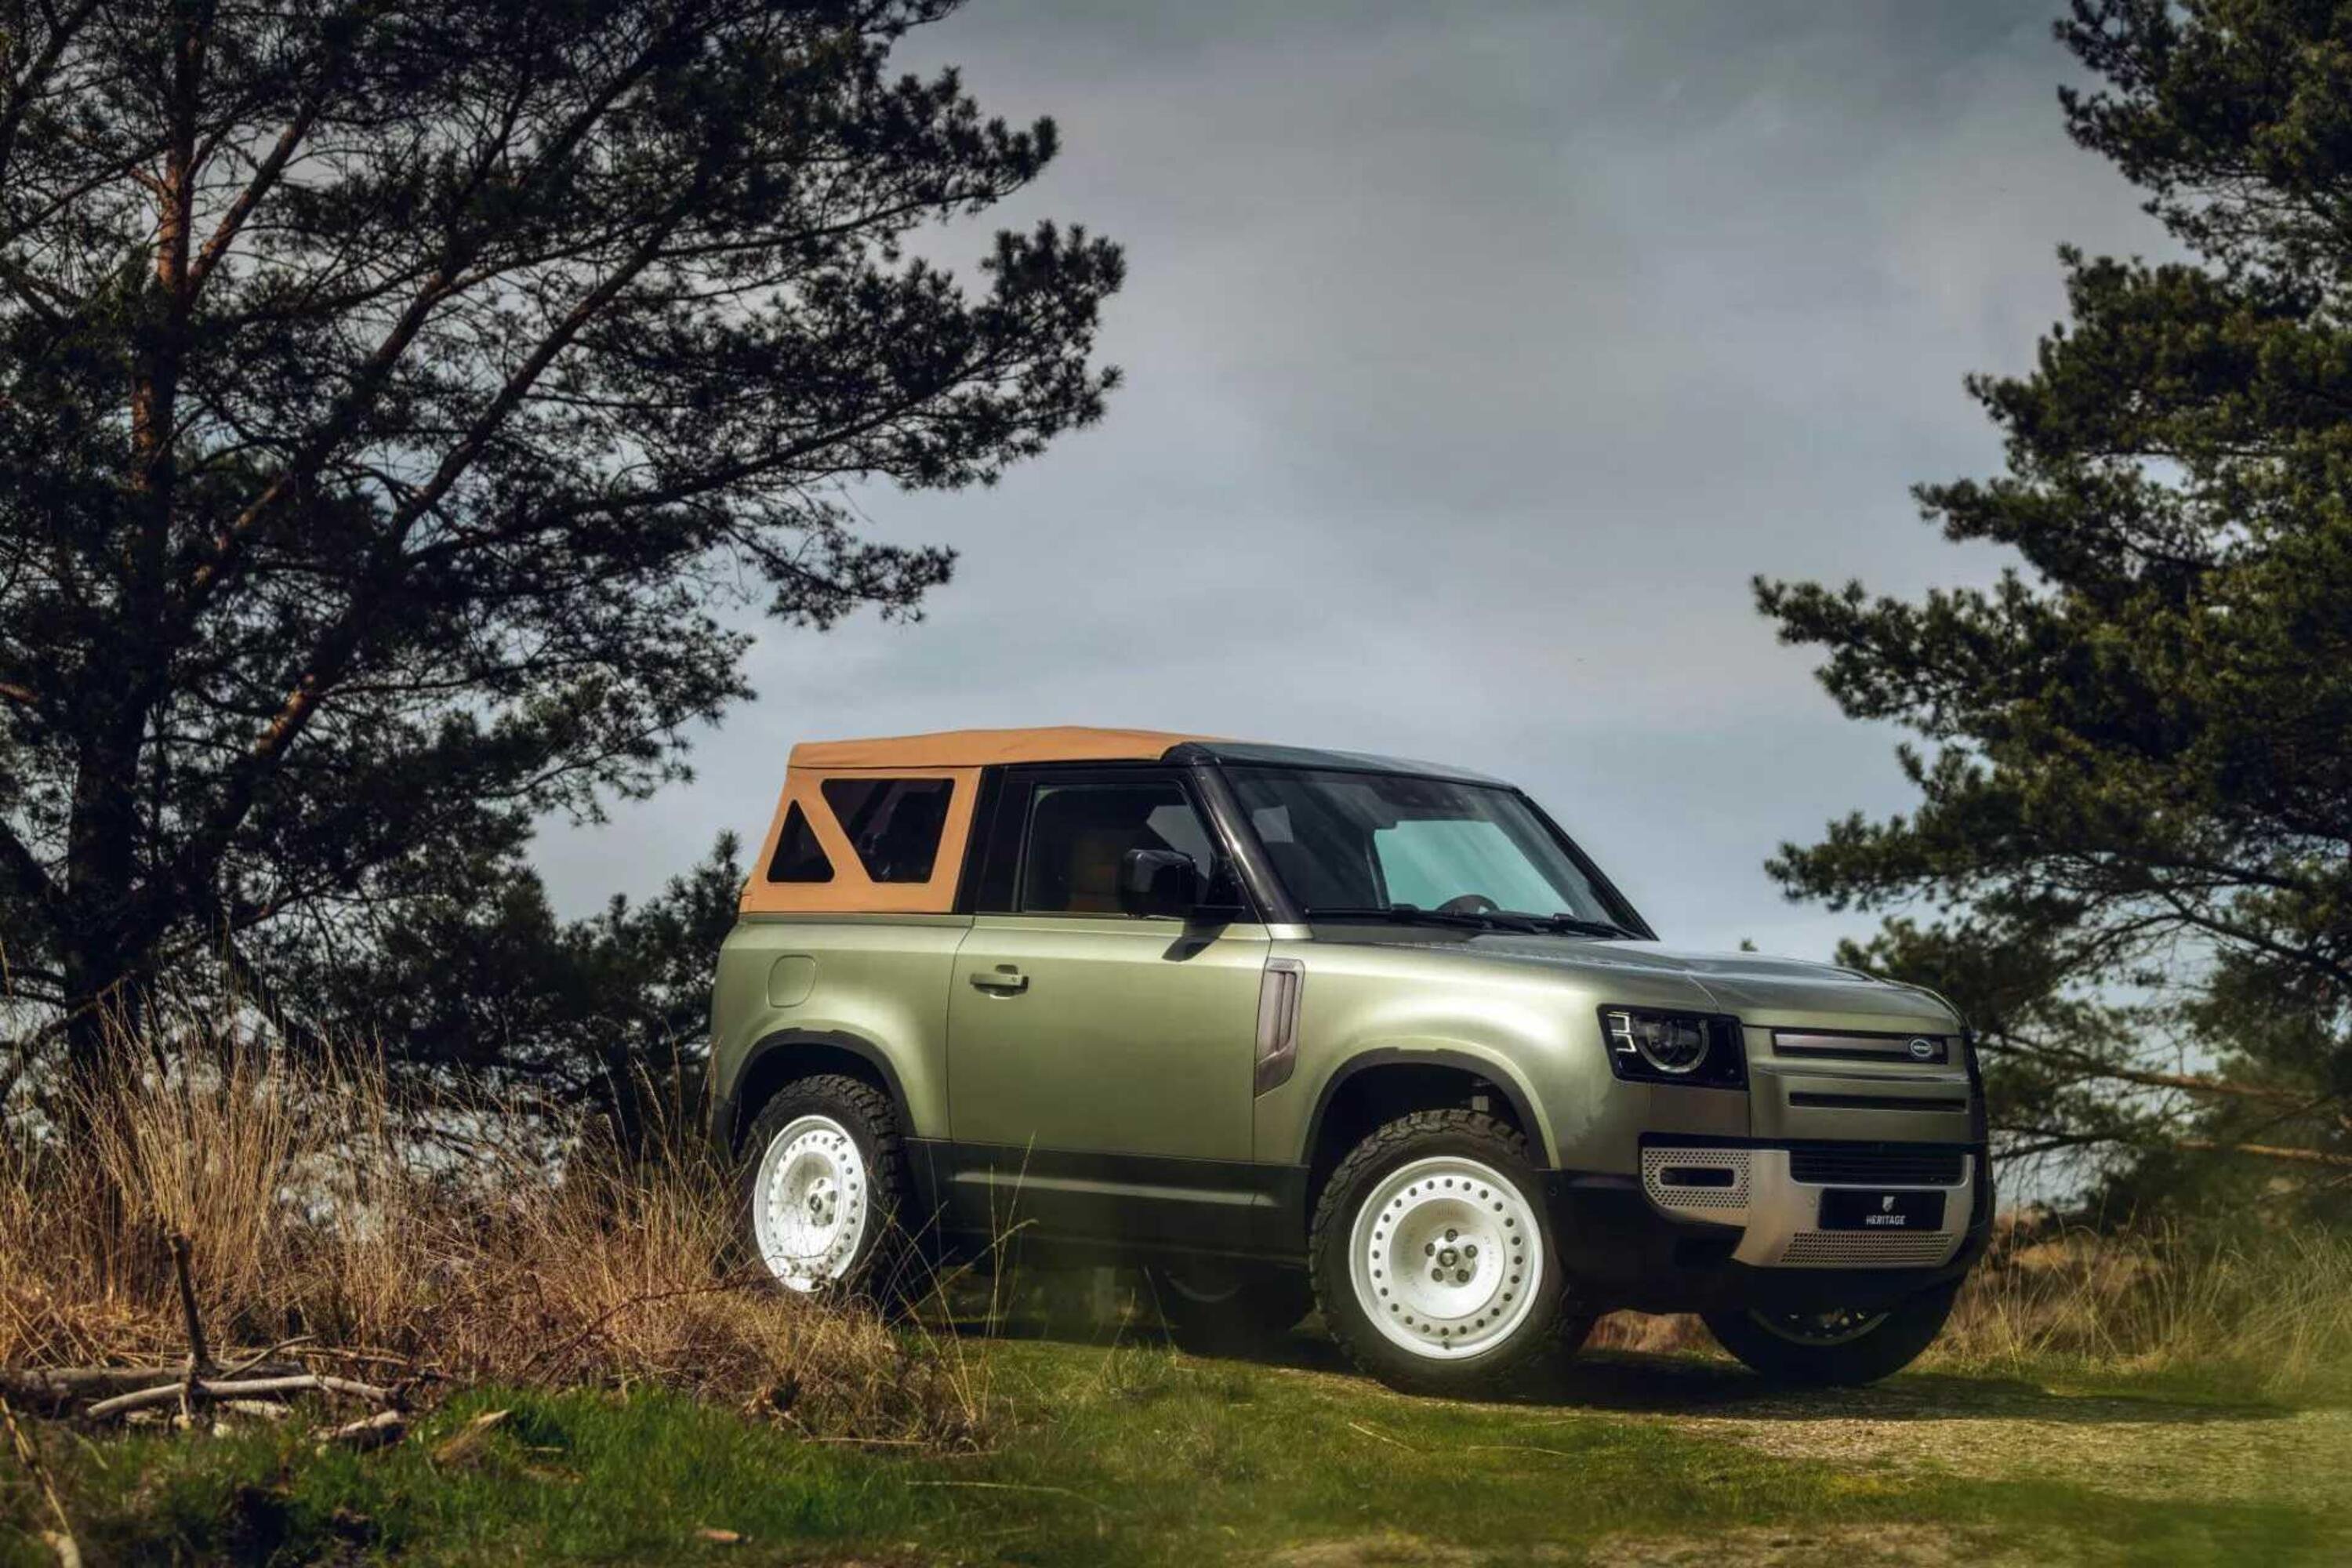 Land Rover Defender soft-top, ma costa 85.000 euro in pi&ugrave; del normale